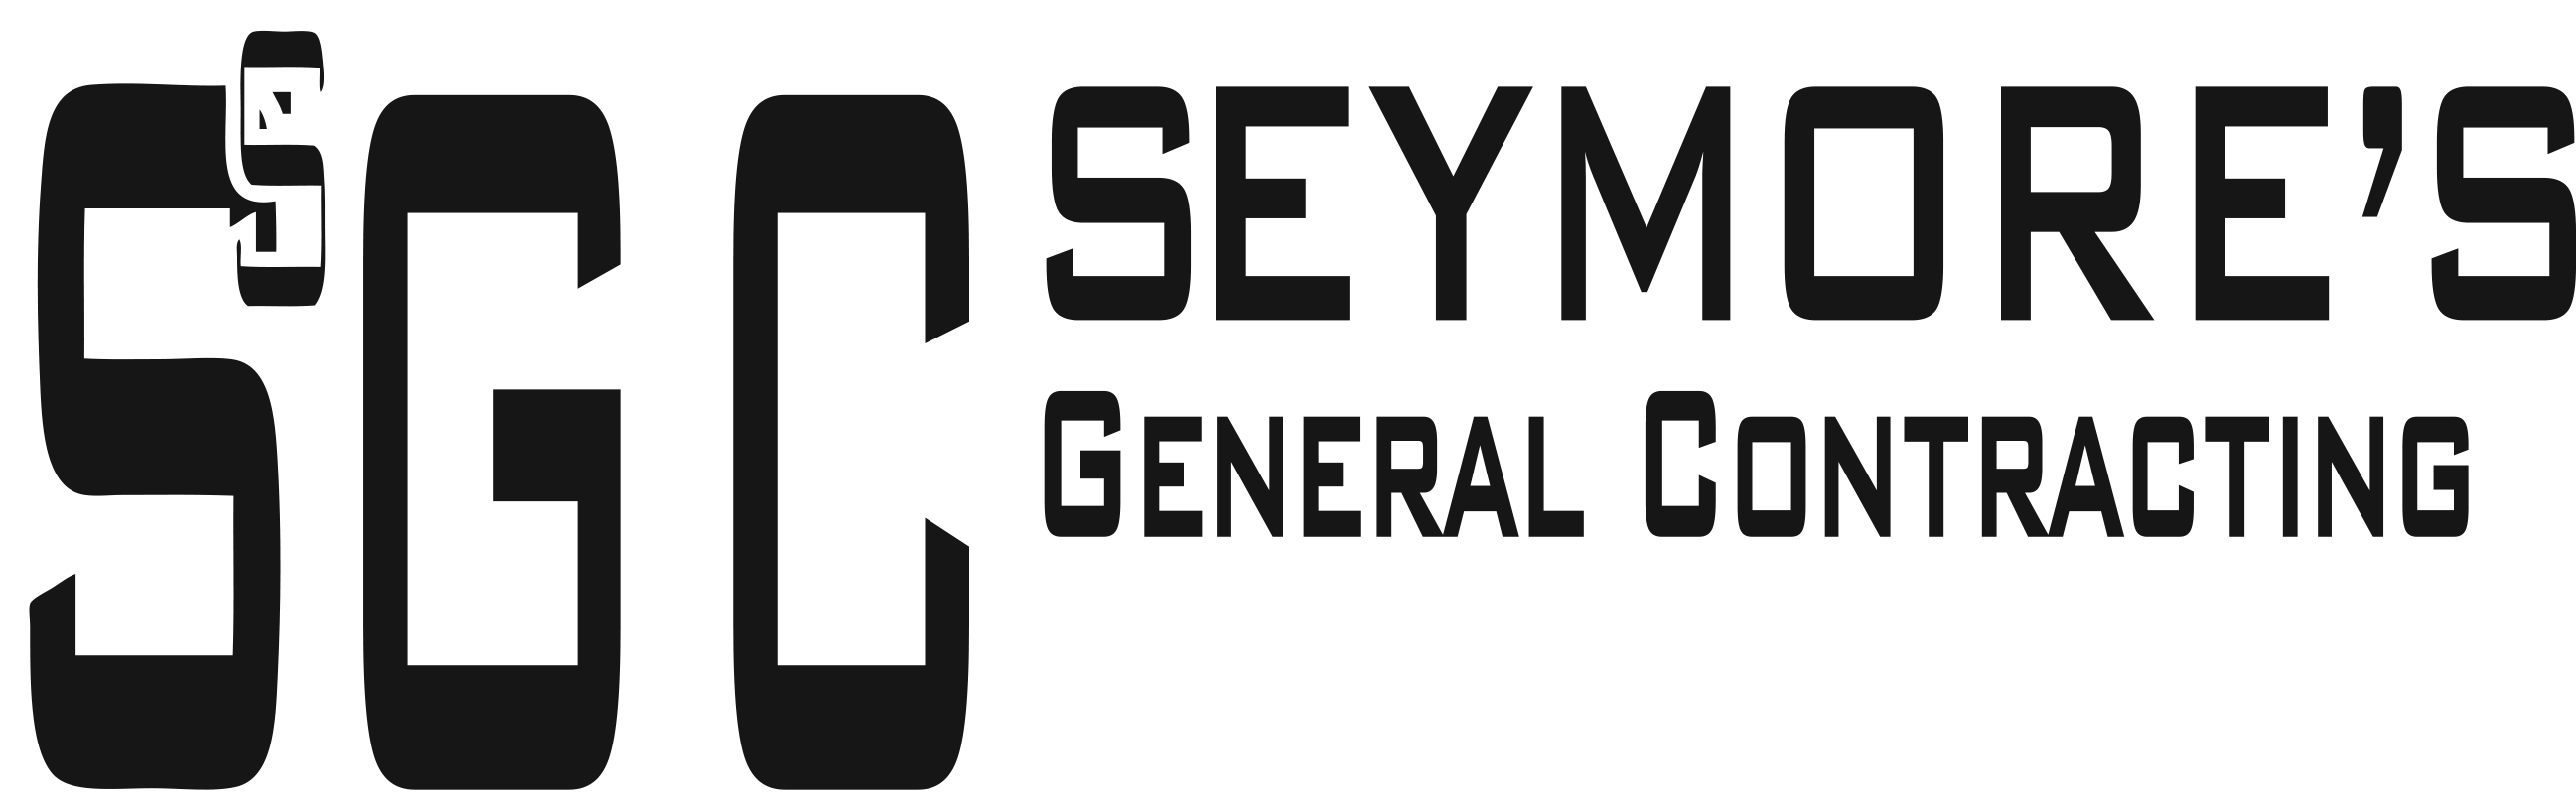 Seymore's General Contracting